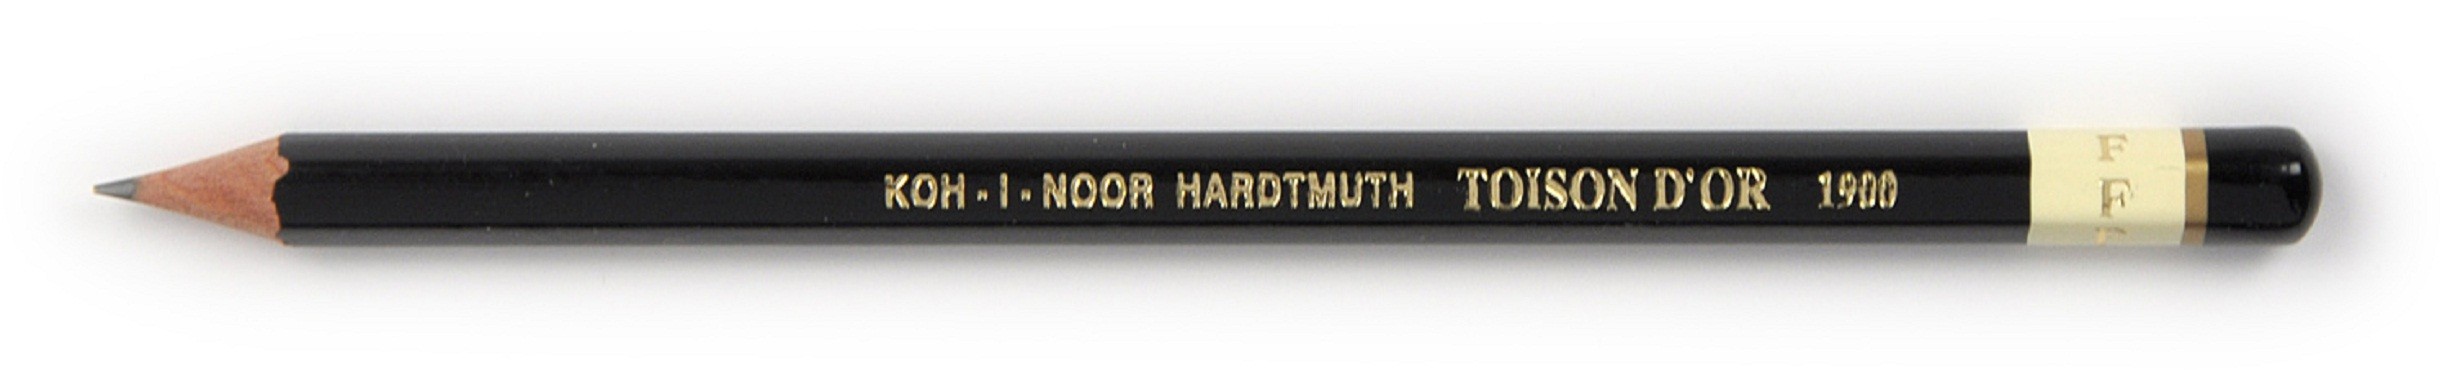 Creion tehnic Toison D'or Art KOH-I-NOOR, duritate F